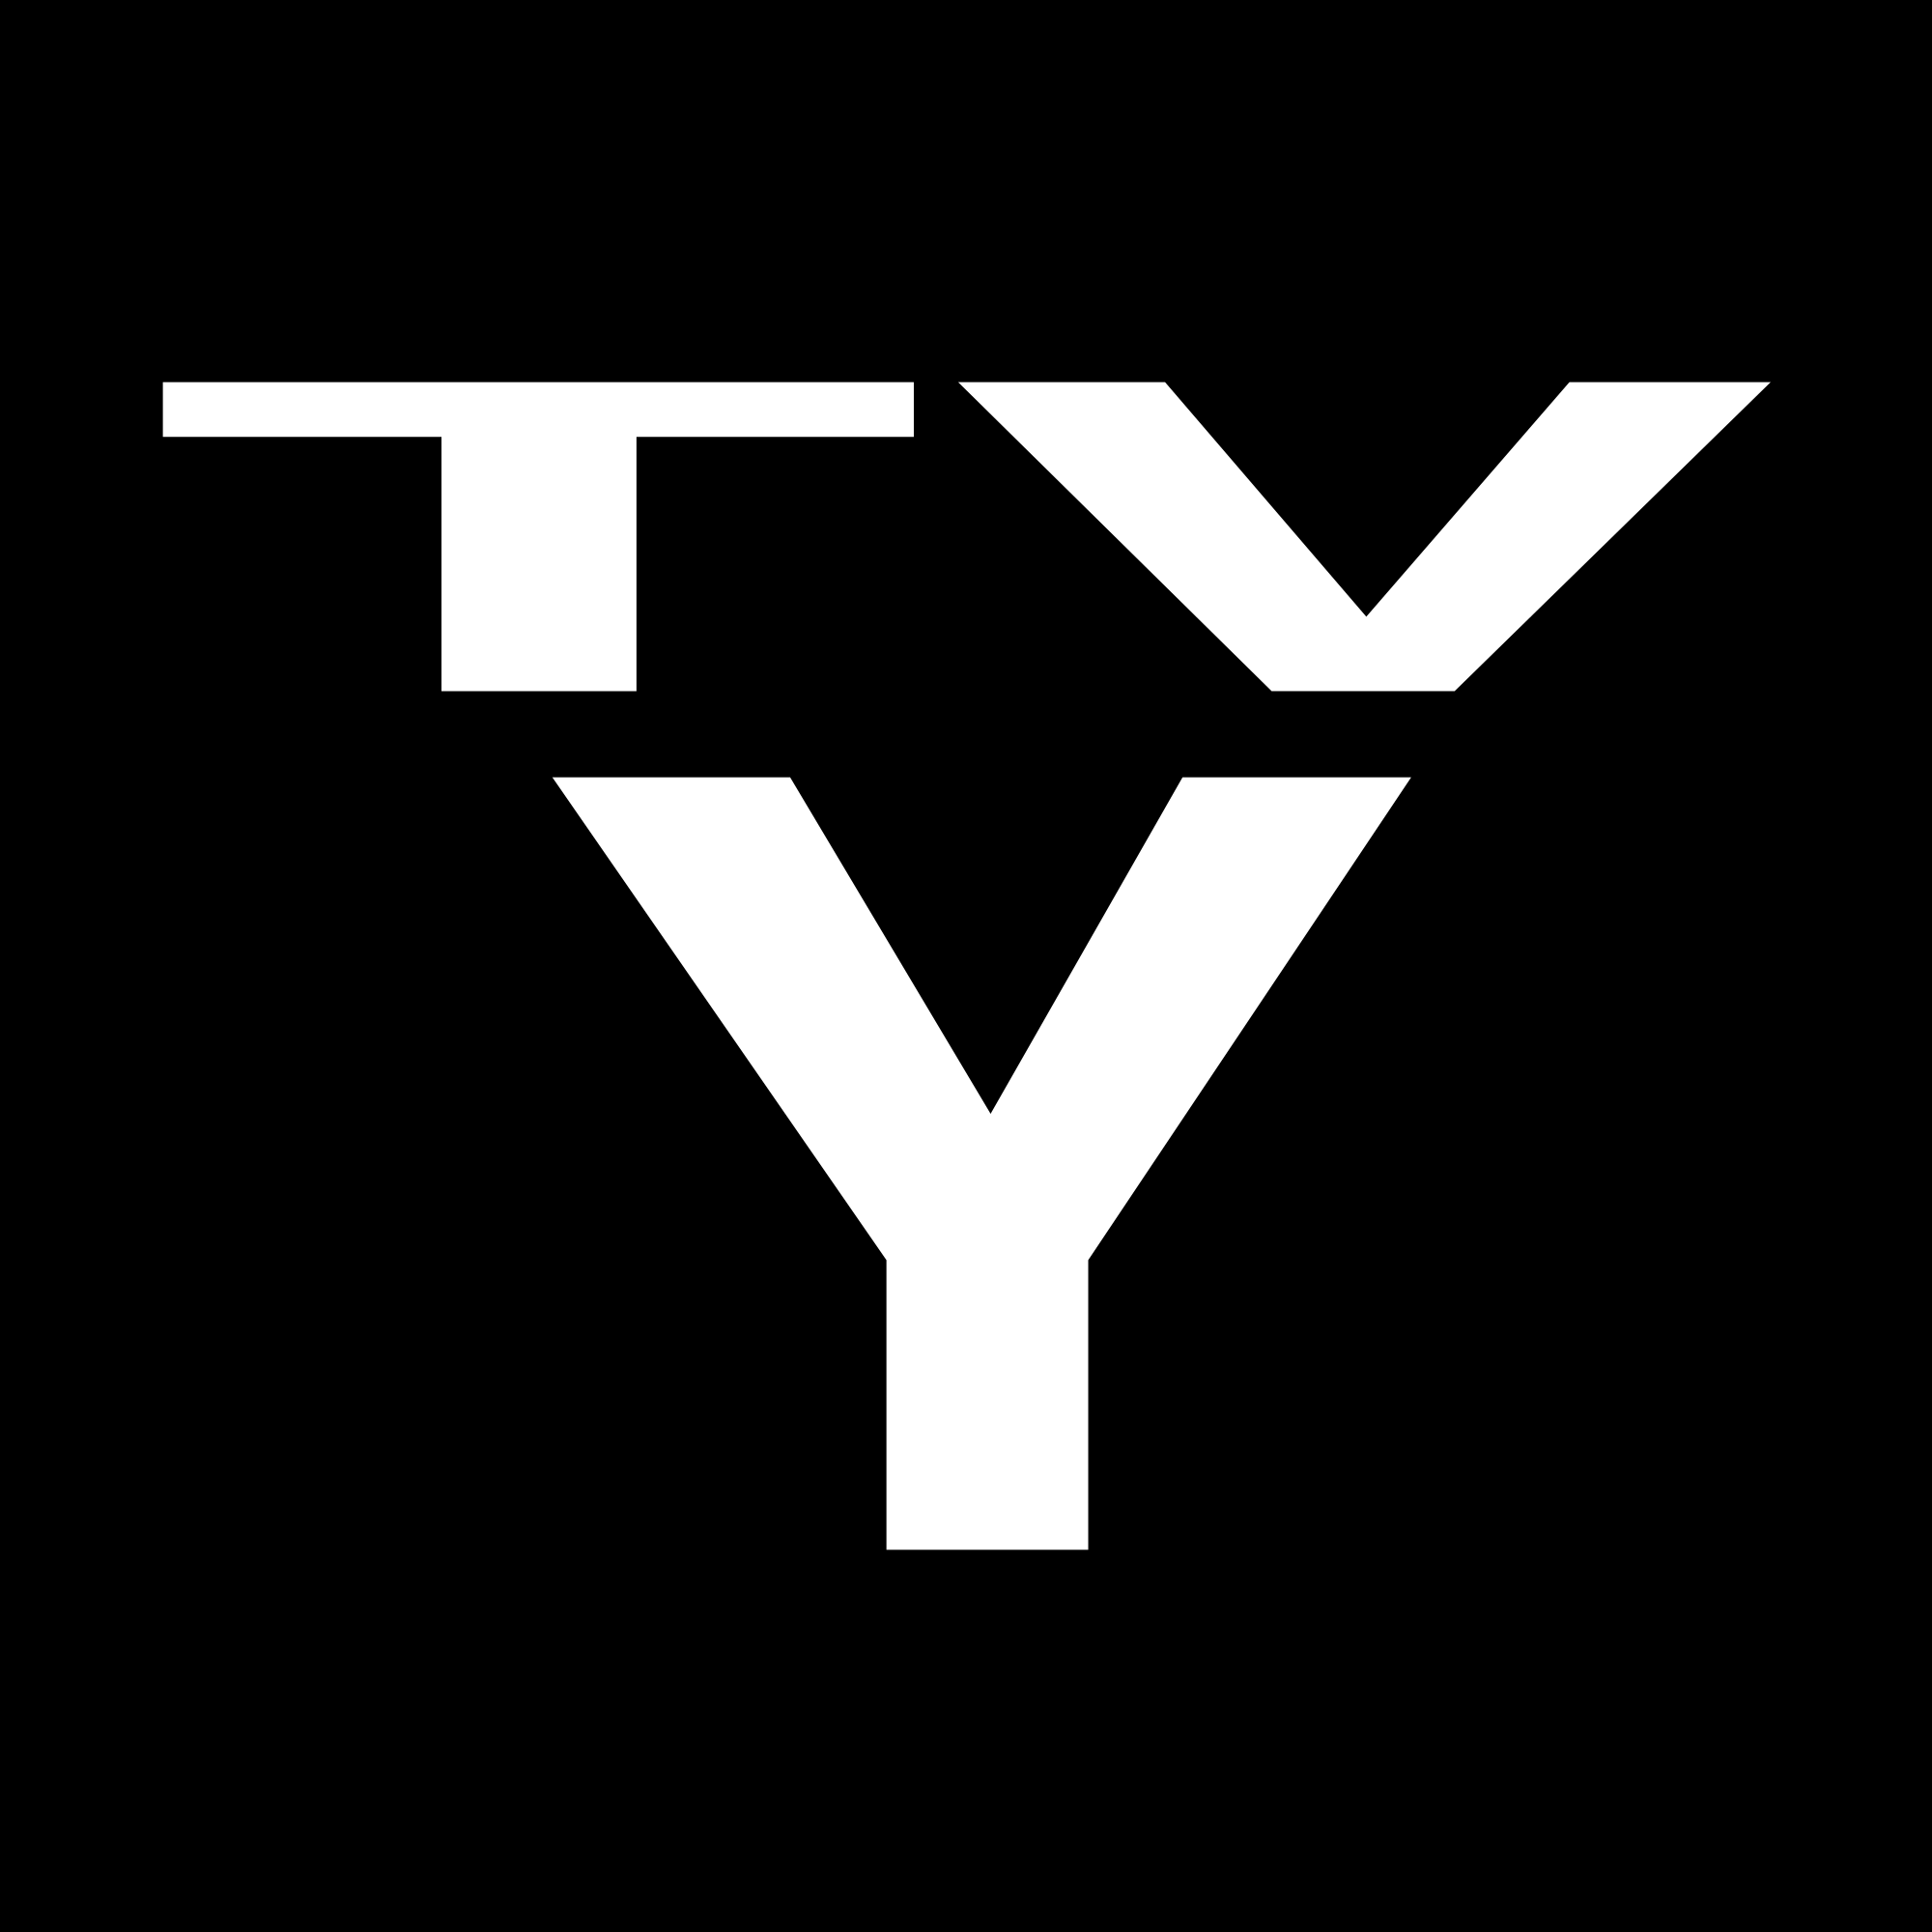 TV-Y7 CC Logo - File:TV-Y icon.svg - Wikimedia Commons